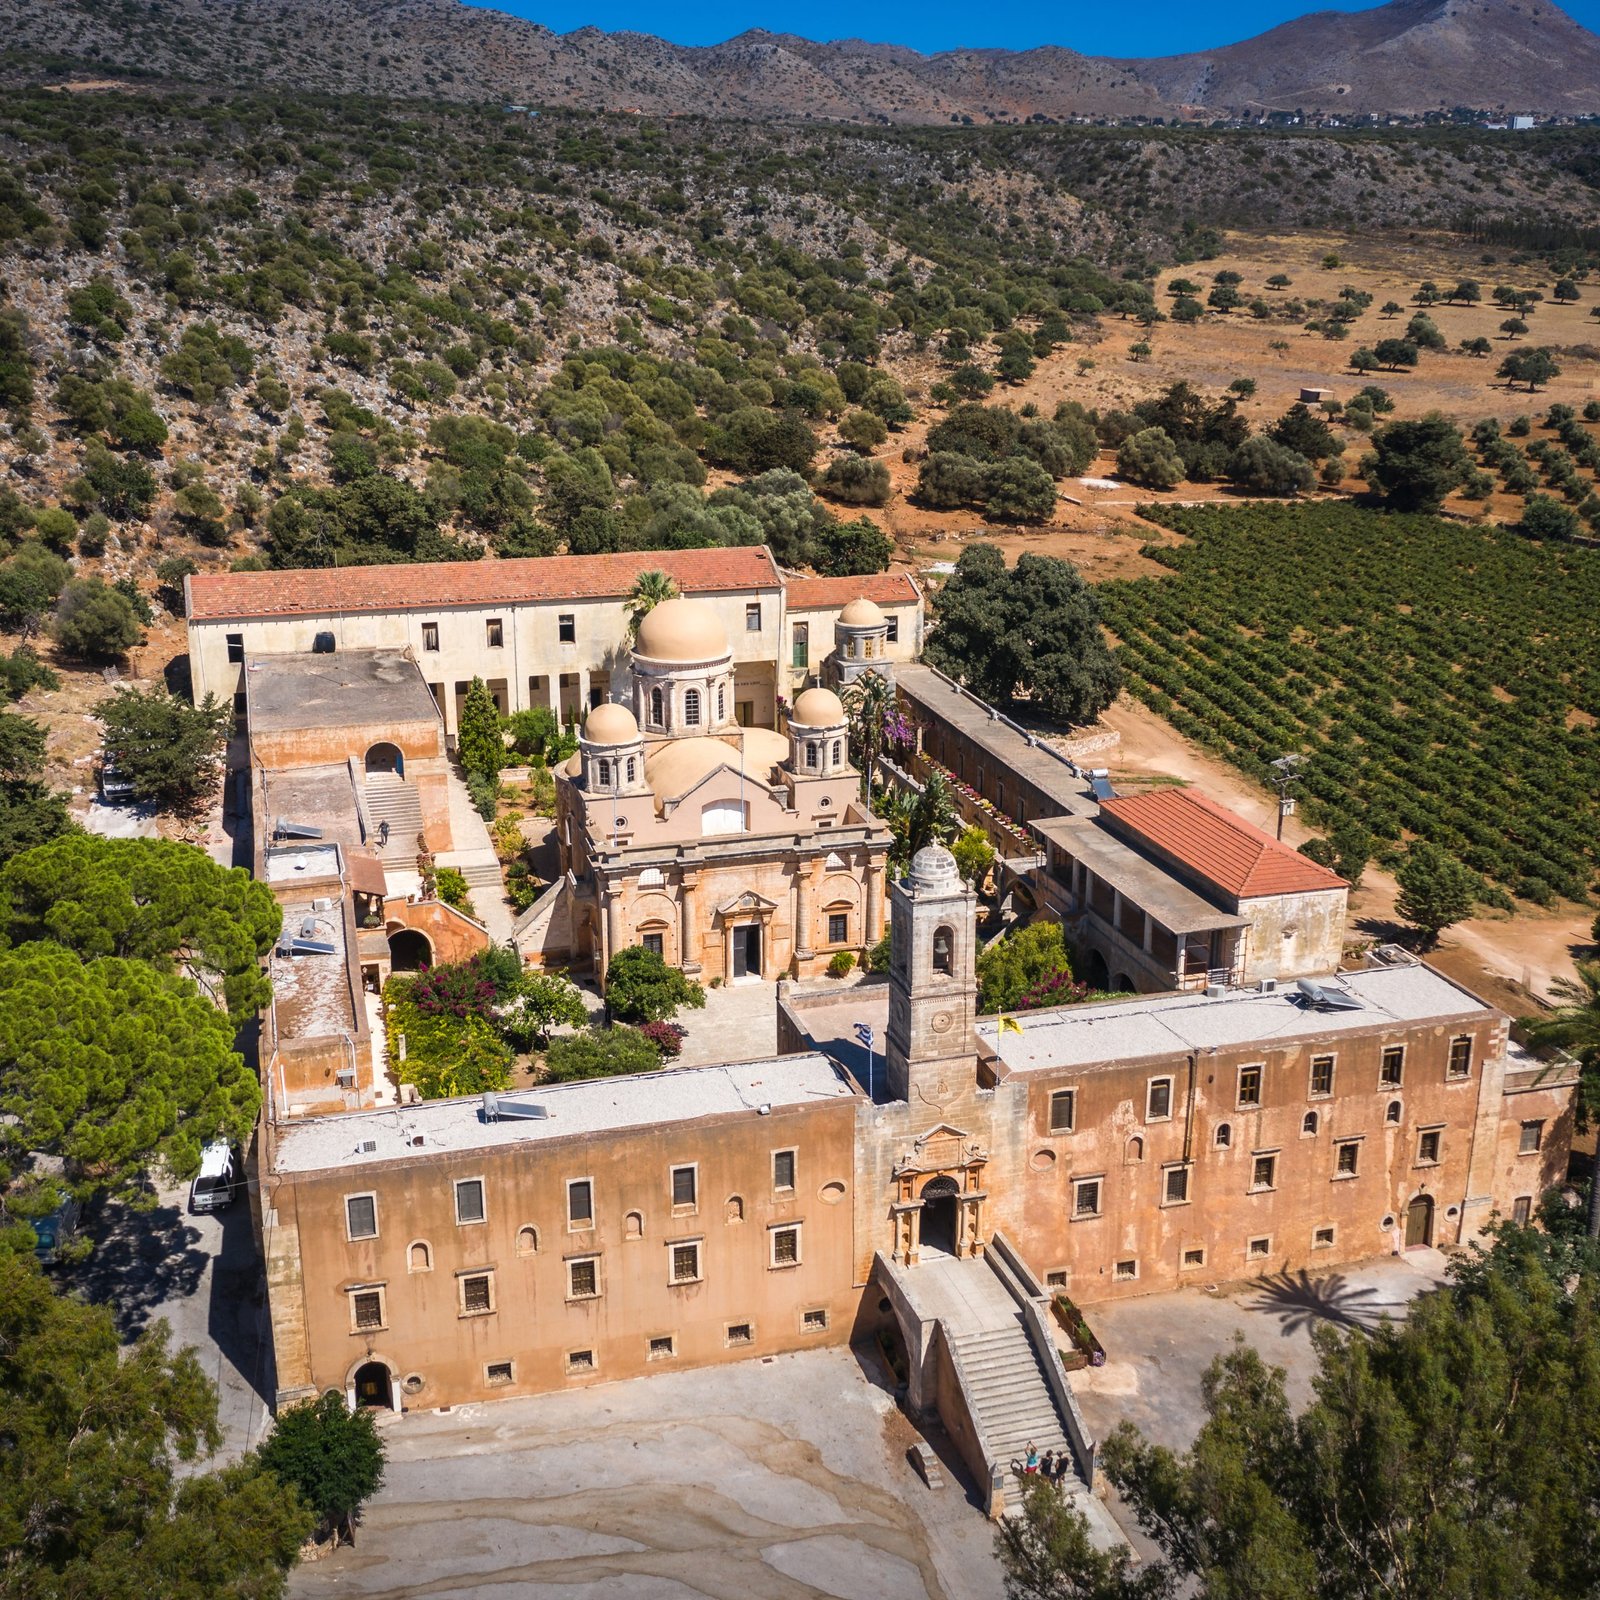 Agia,Triada,Tzagaroli,Monastery Crete